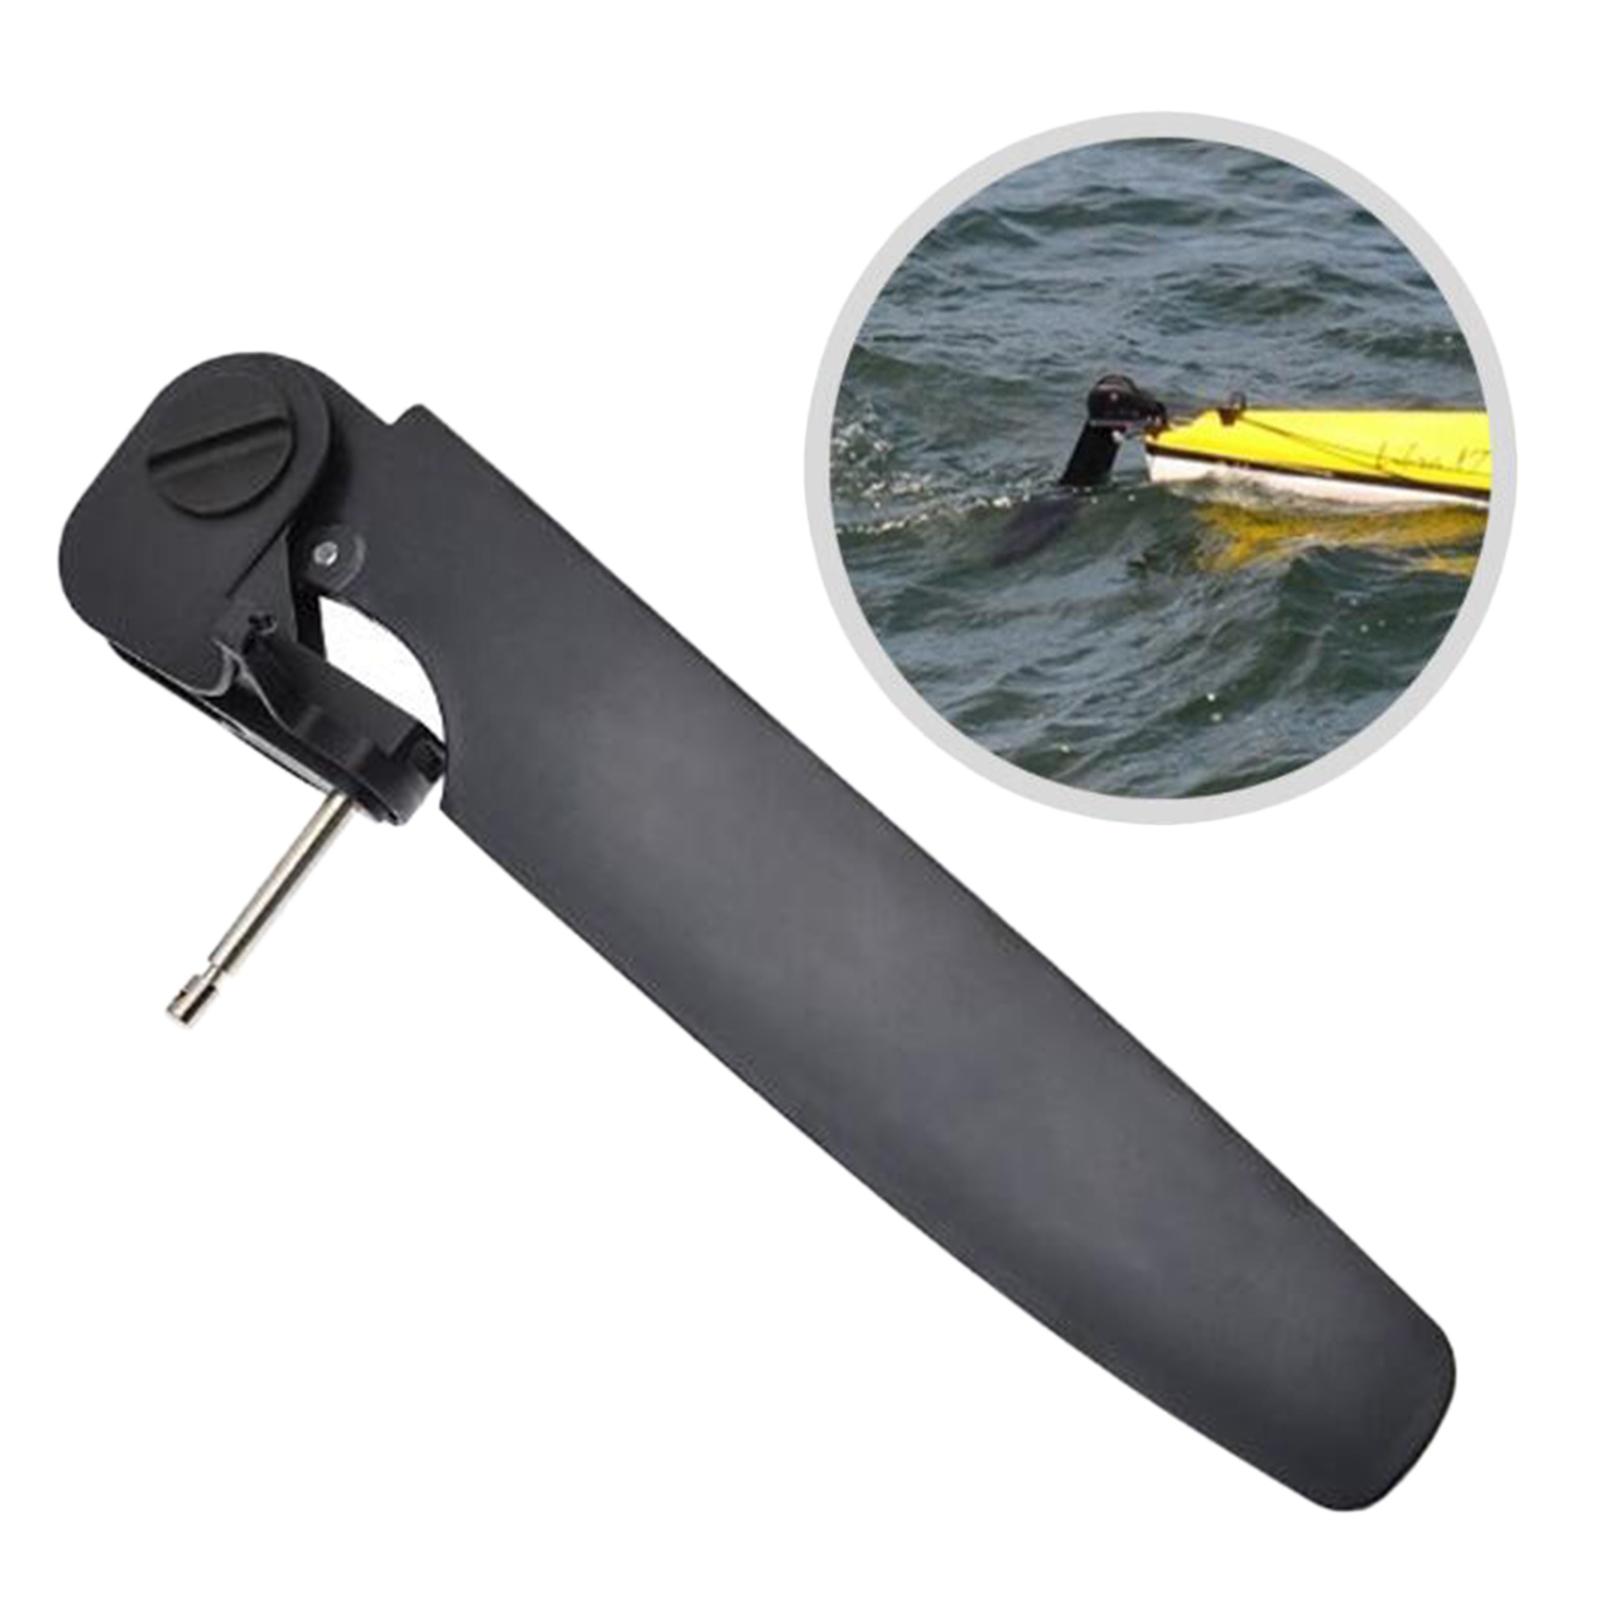 Canoe Kayak Boat Rudder Steering System Fishing Rear Tail Foot Control 80MM